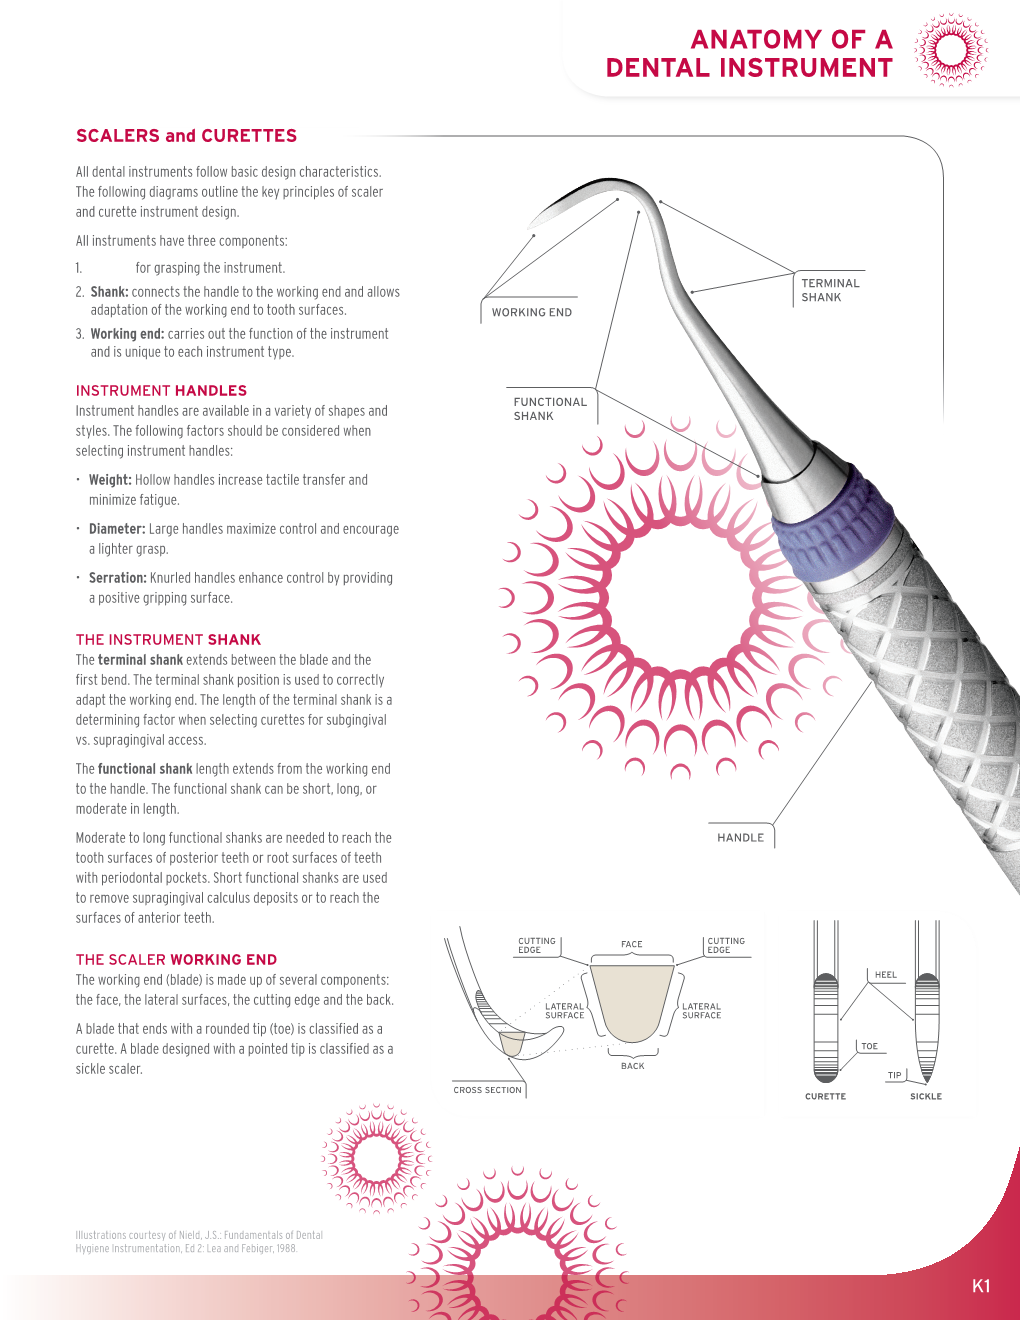 Anatomy of a Dental Instrument